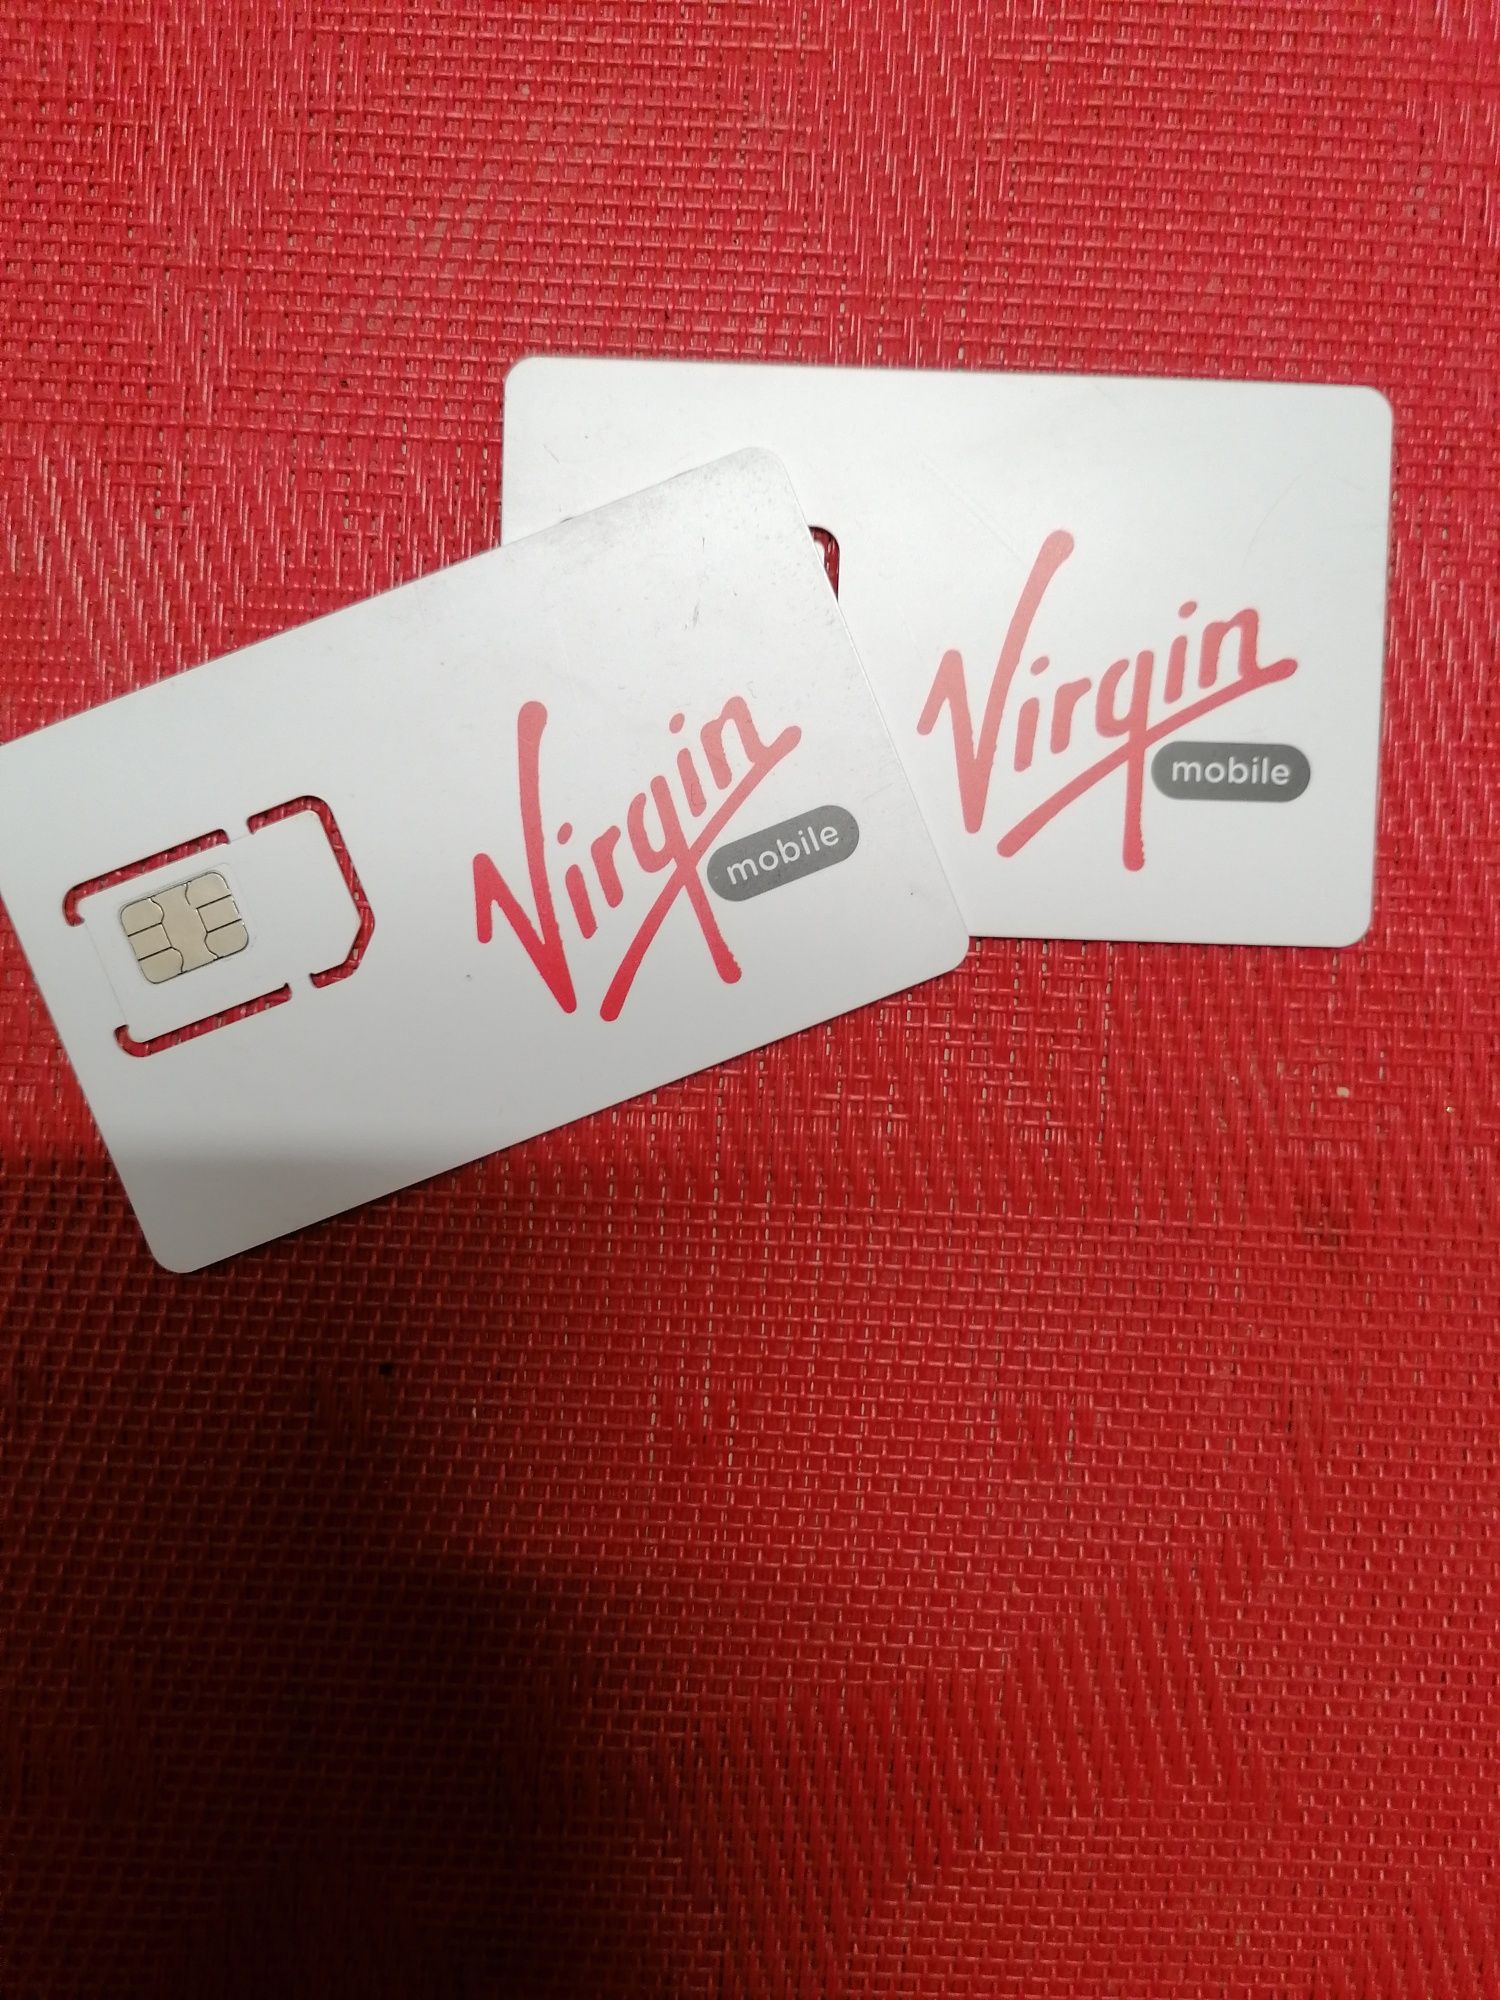 Numery sieć Virgin mobile